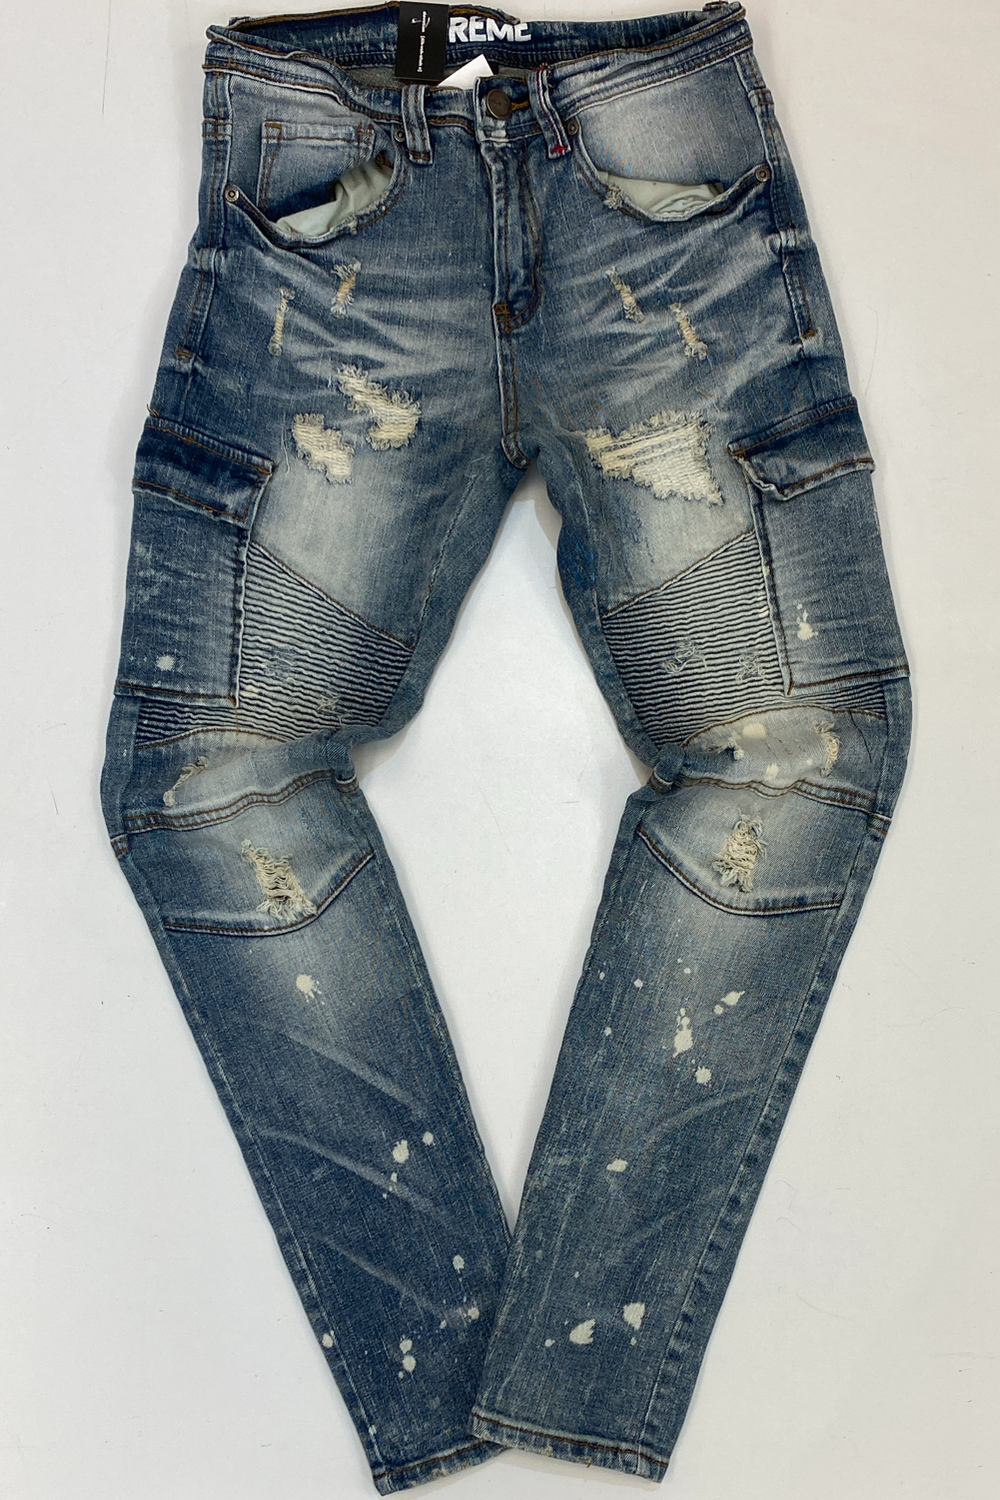 Preme- denim jeans w/side pockets